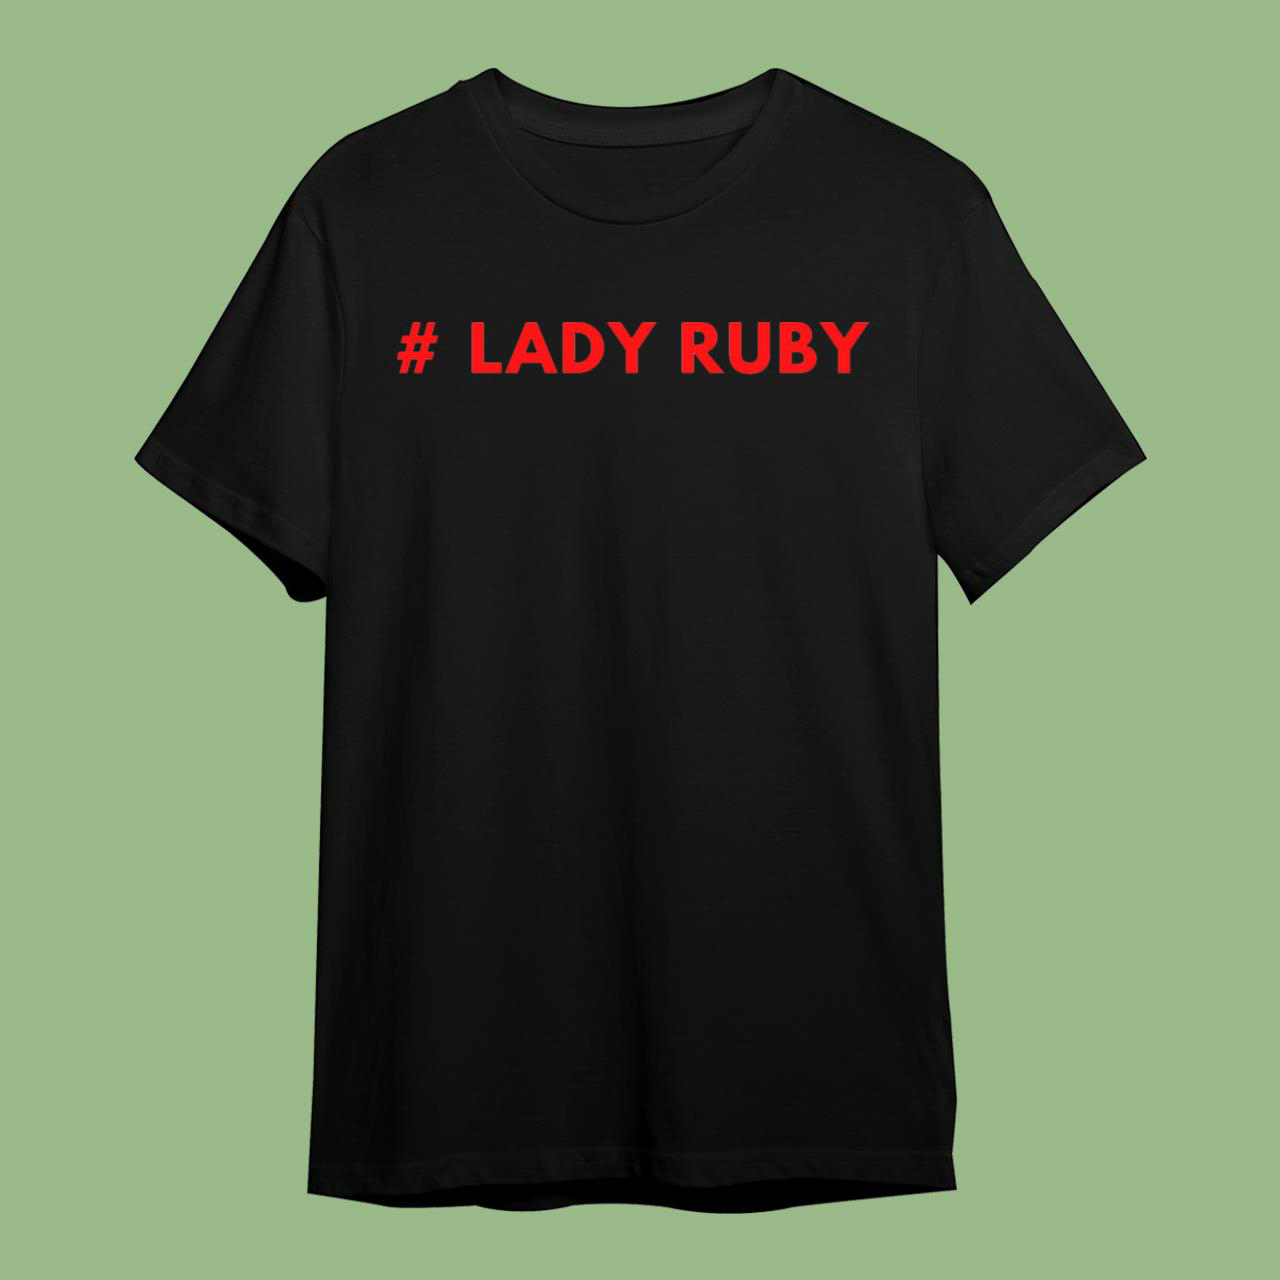 Lady Ruby Hastag Classic T Shirt